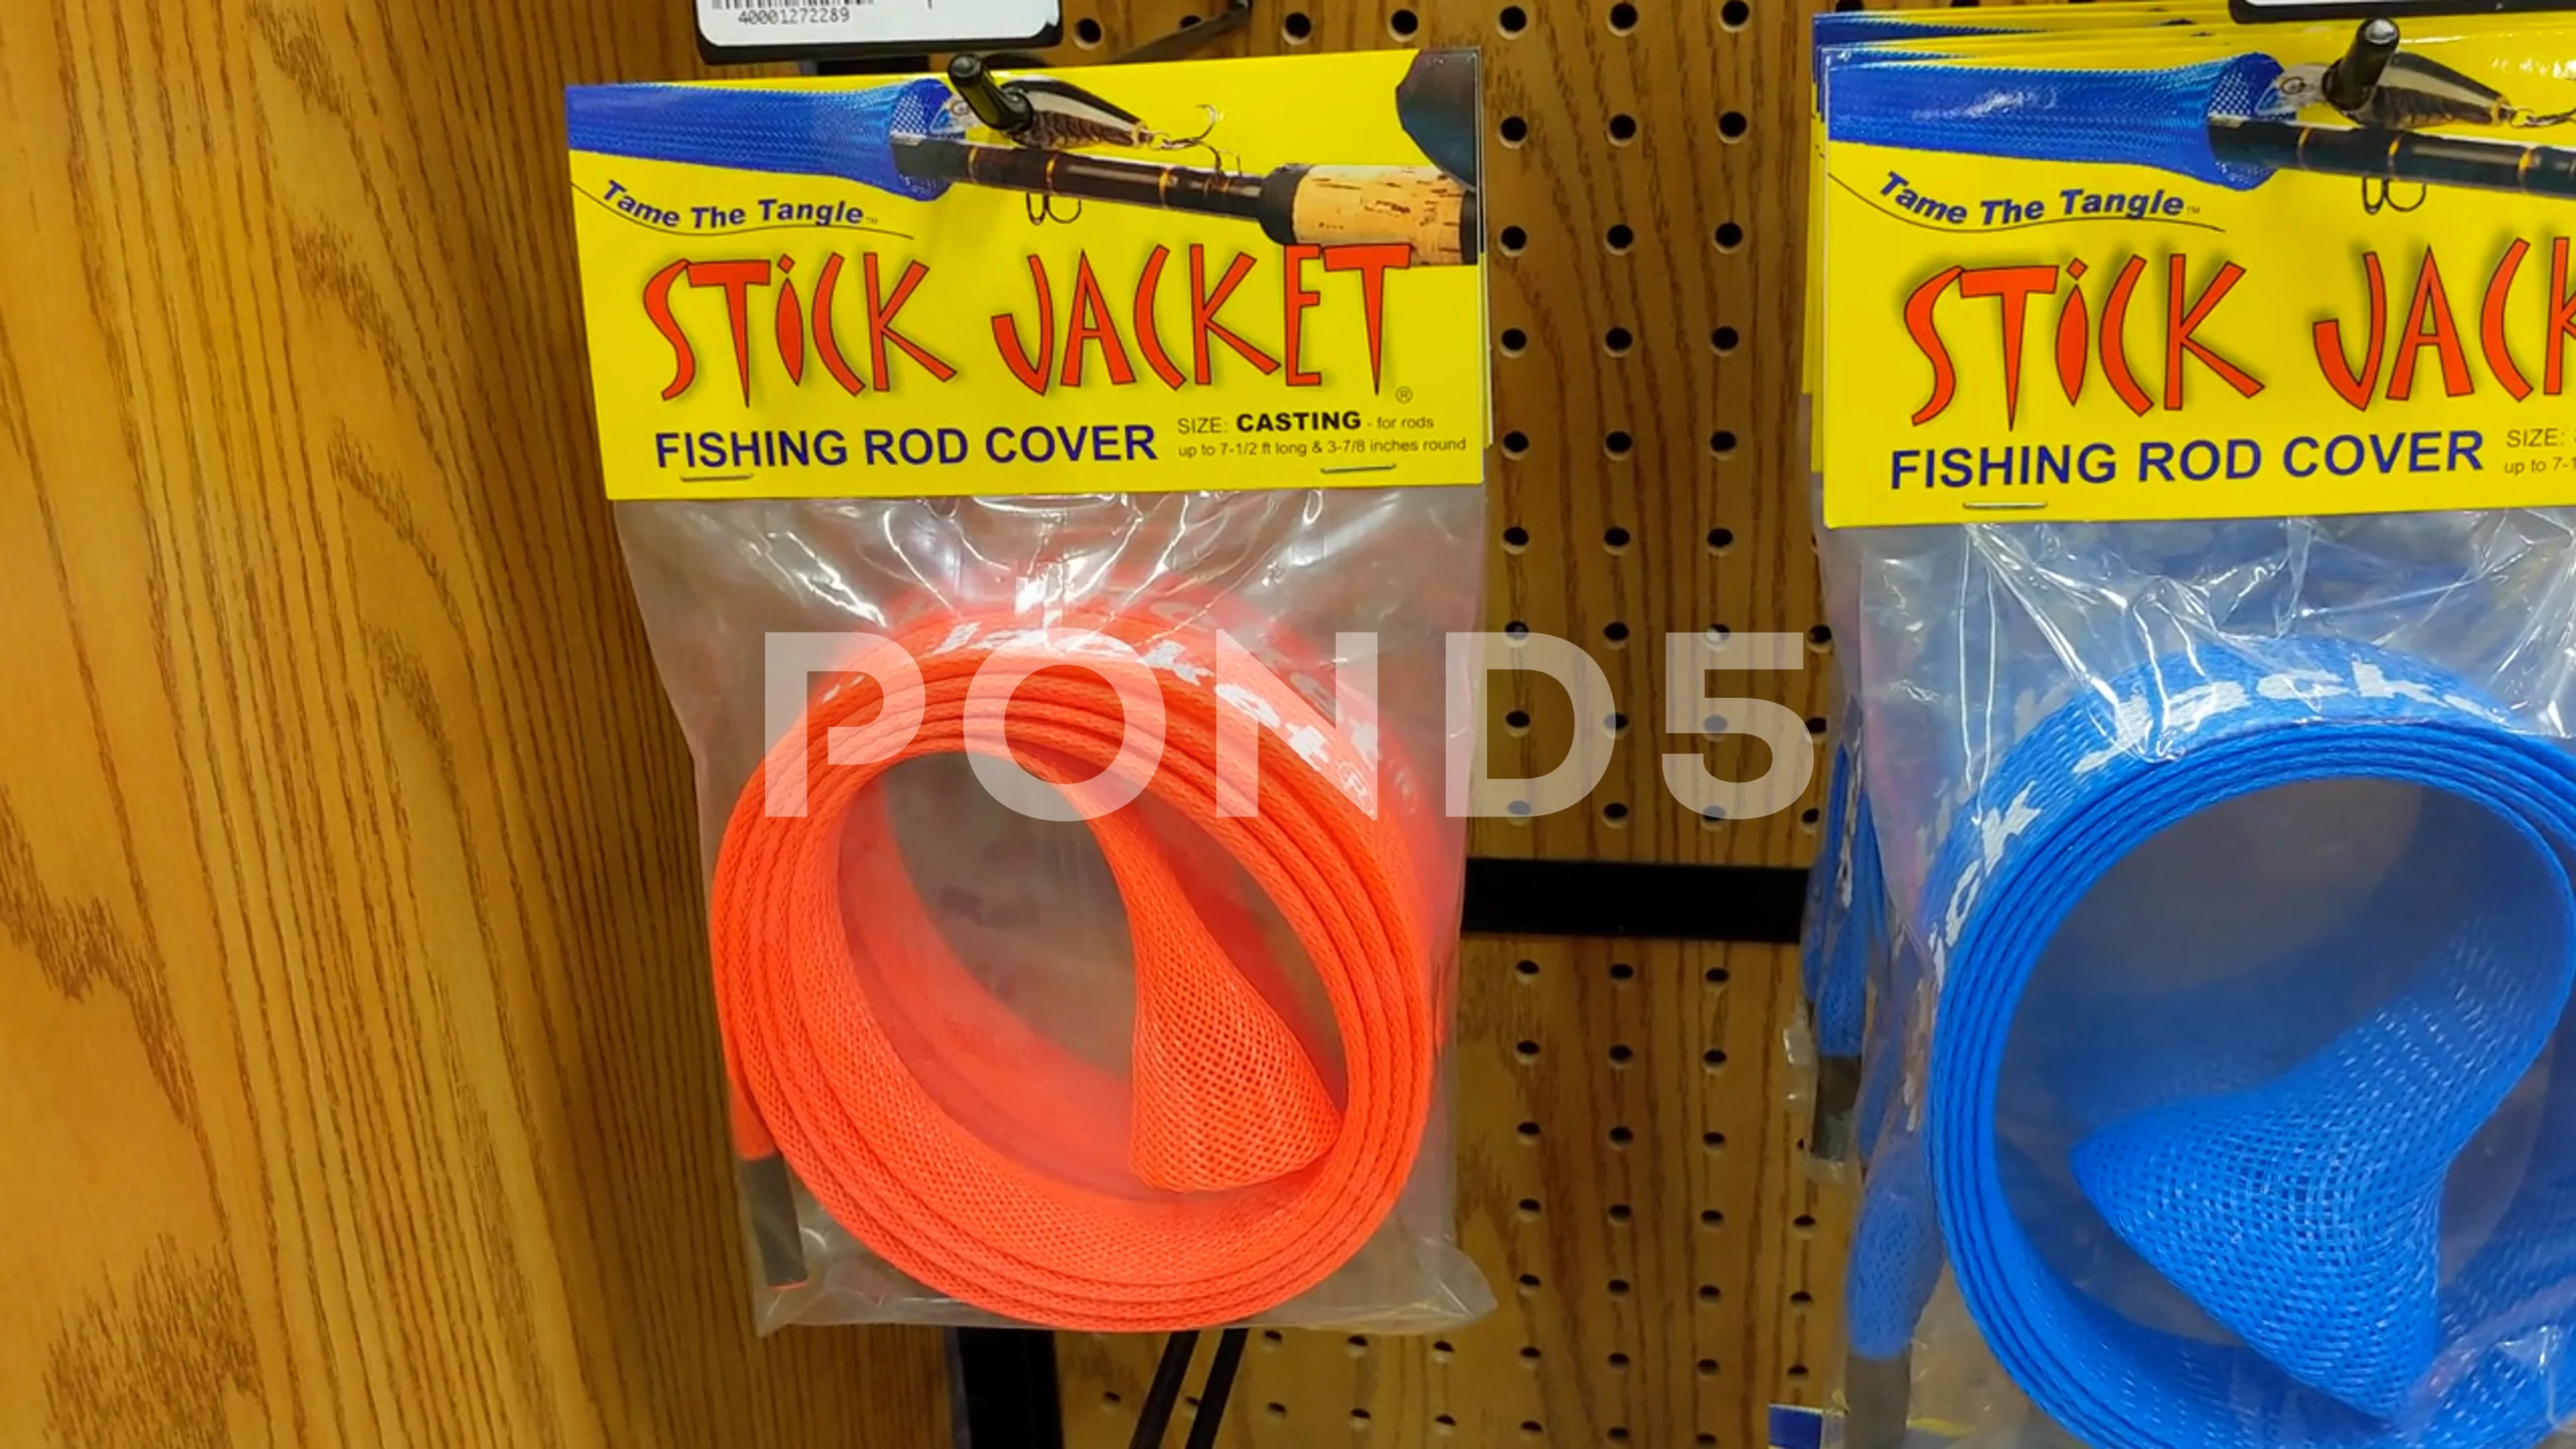 Stick Jacket Fishing Rod Covers Casting Size